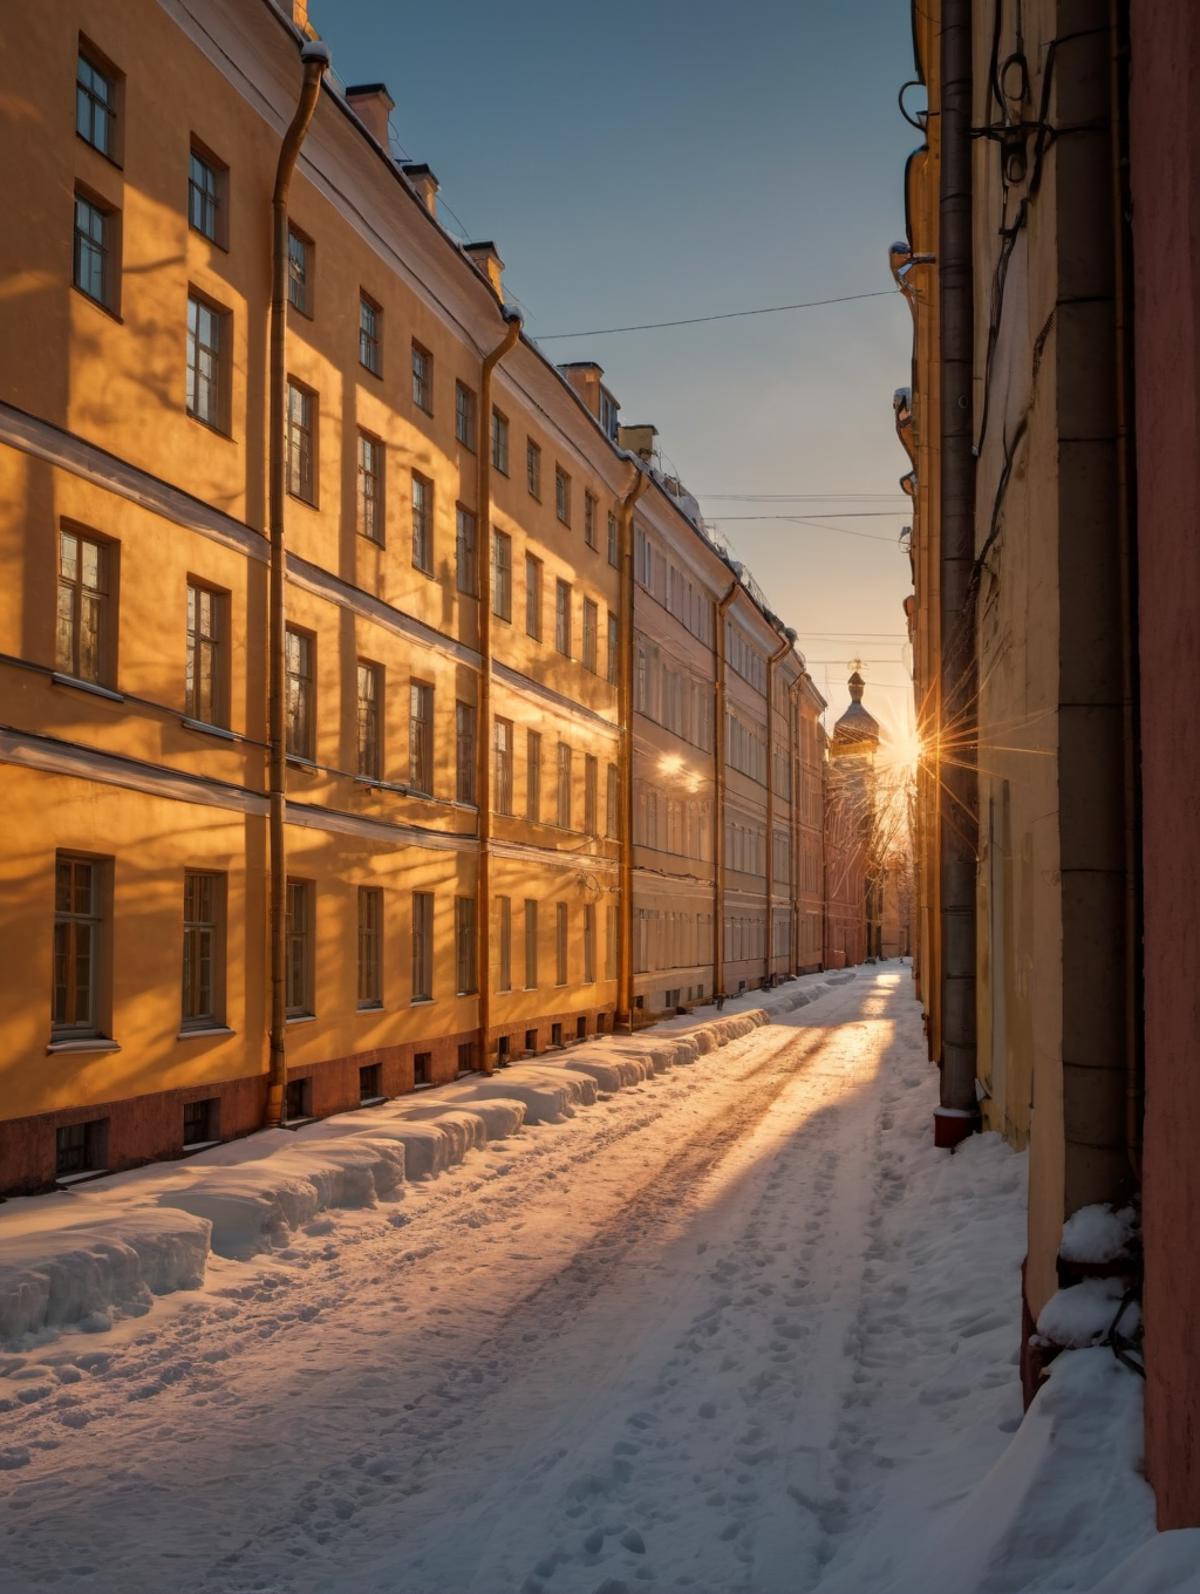 Saint Petersburg streets (SDXL) image by peeledkot